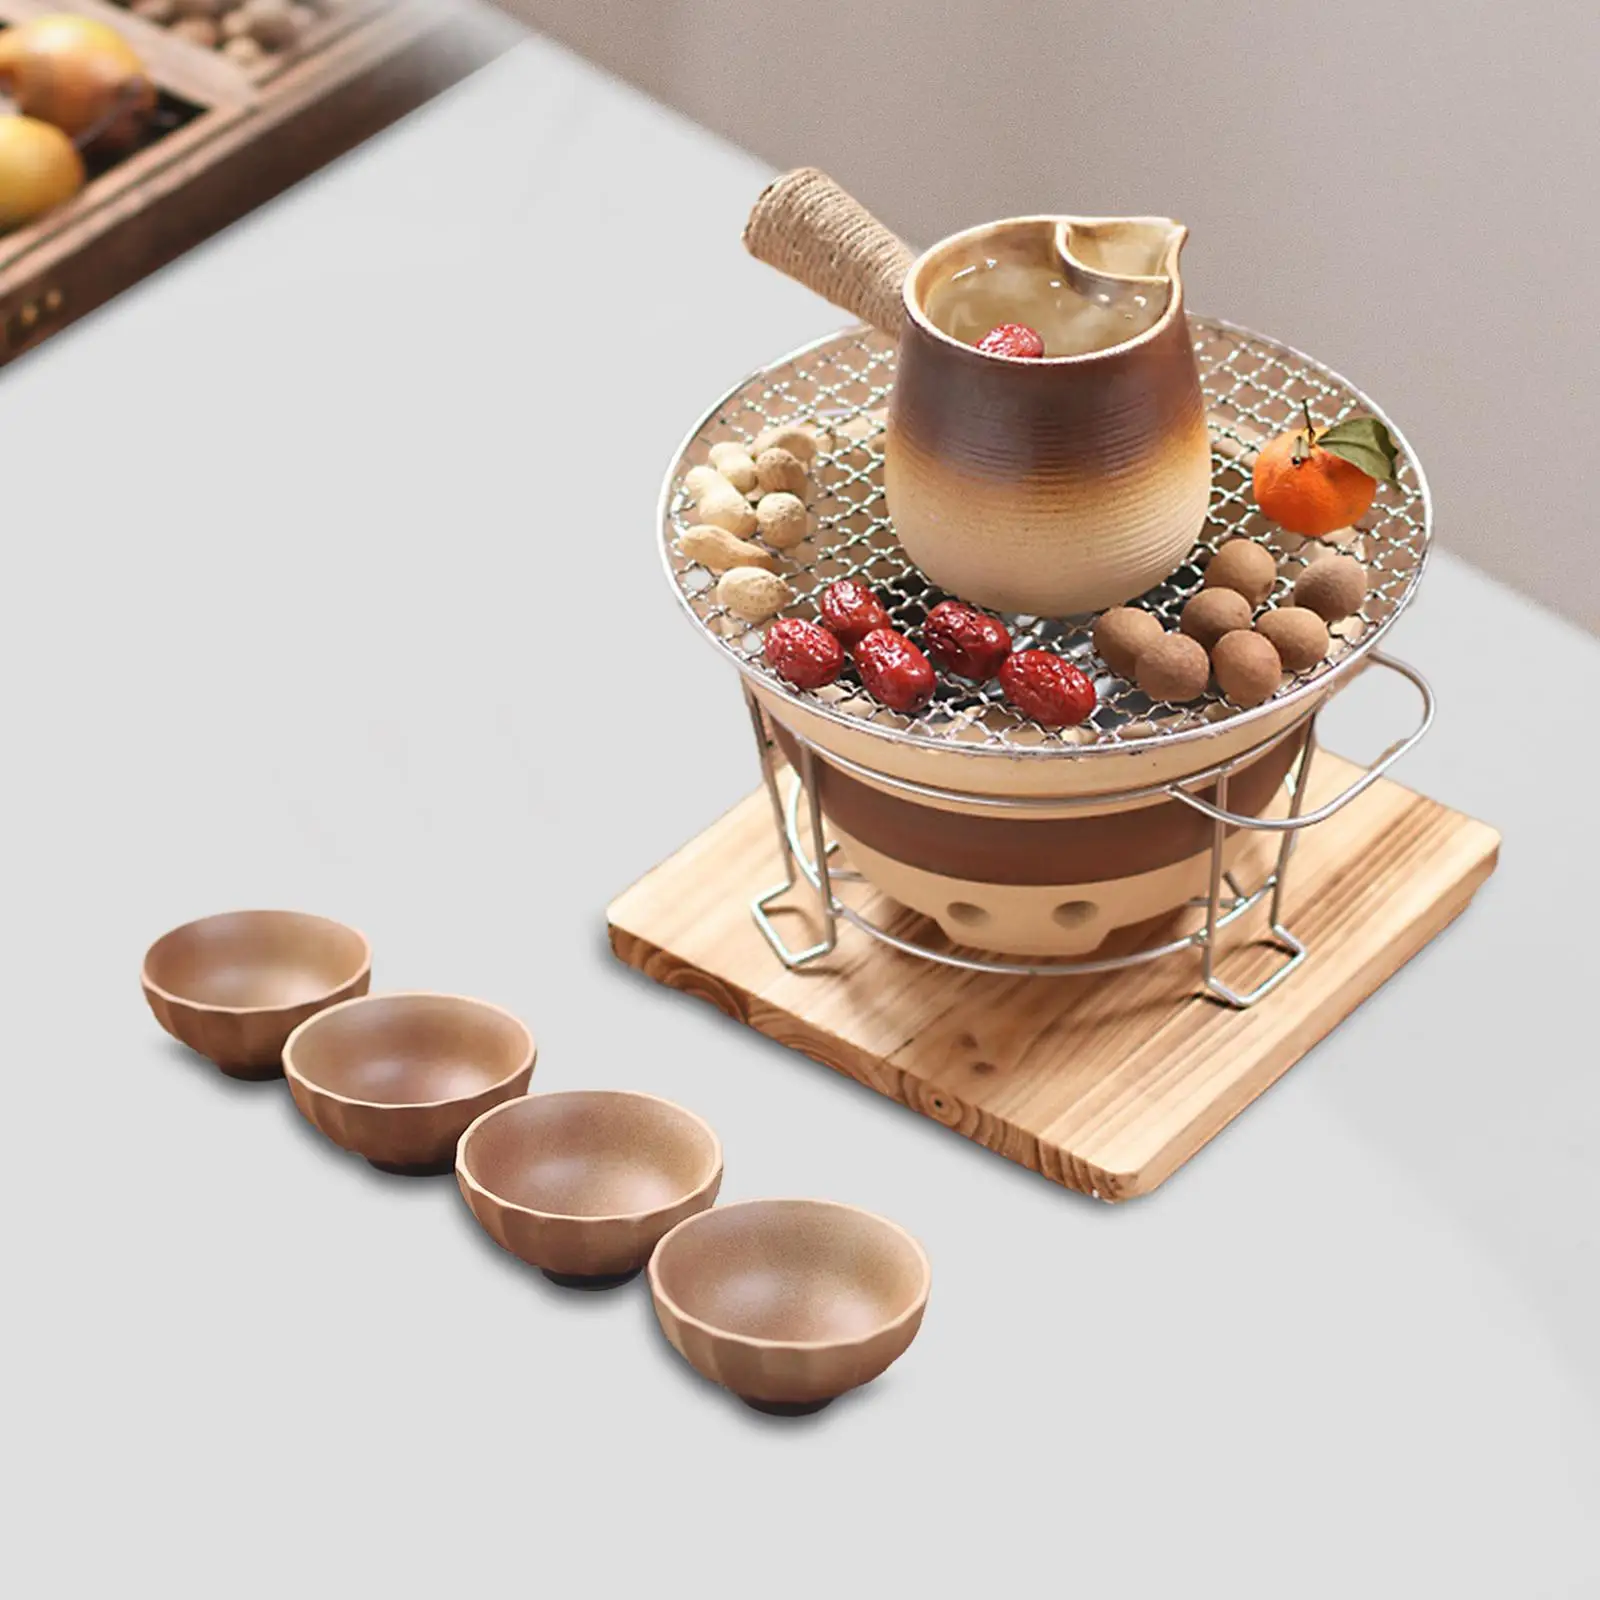 4 Pieces Ceramic Tea Cup Set Portable Petal Shape Chinese Tea Cups for Office Travel Tea Ceremony Party Cafe Green Tea